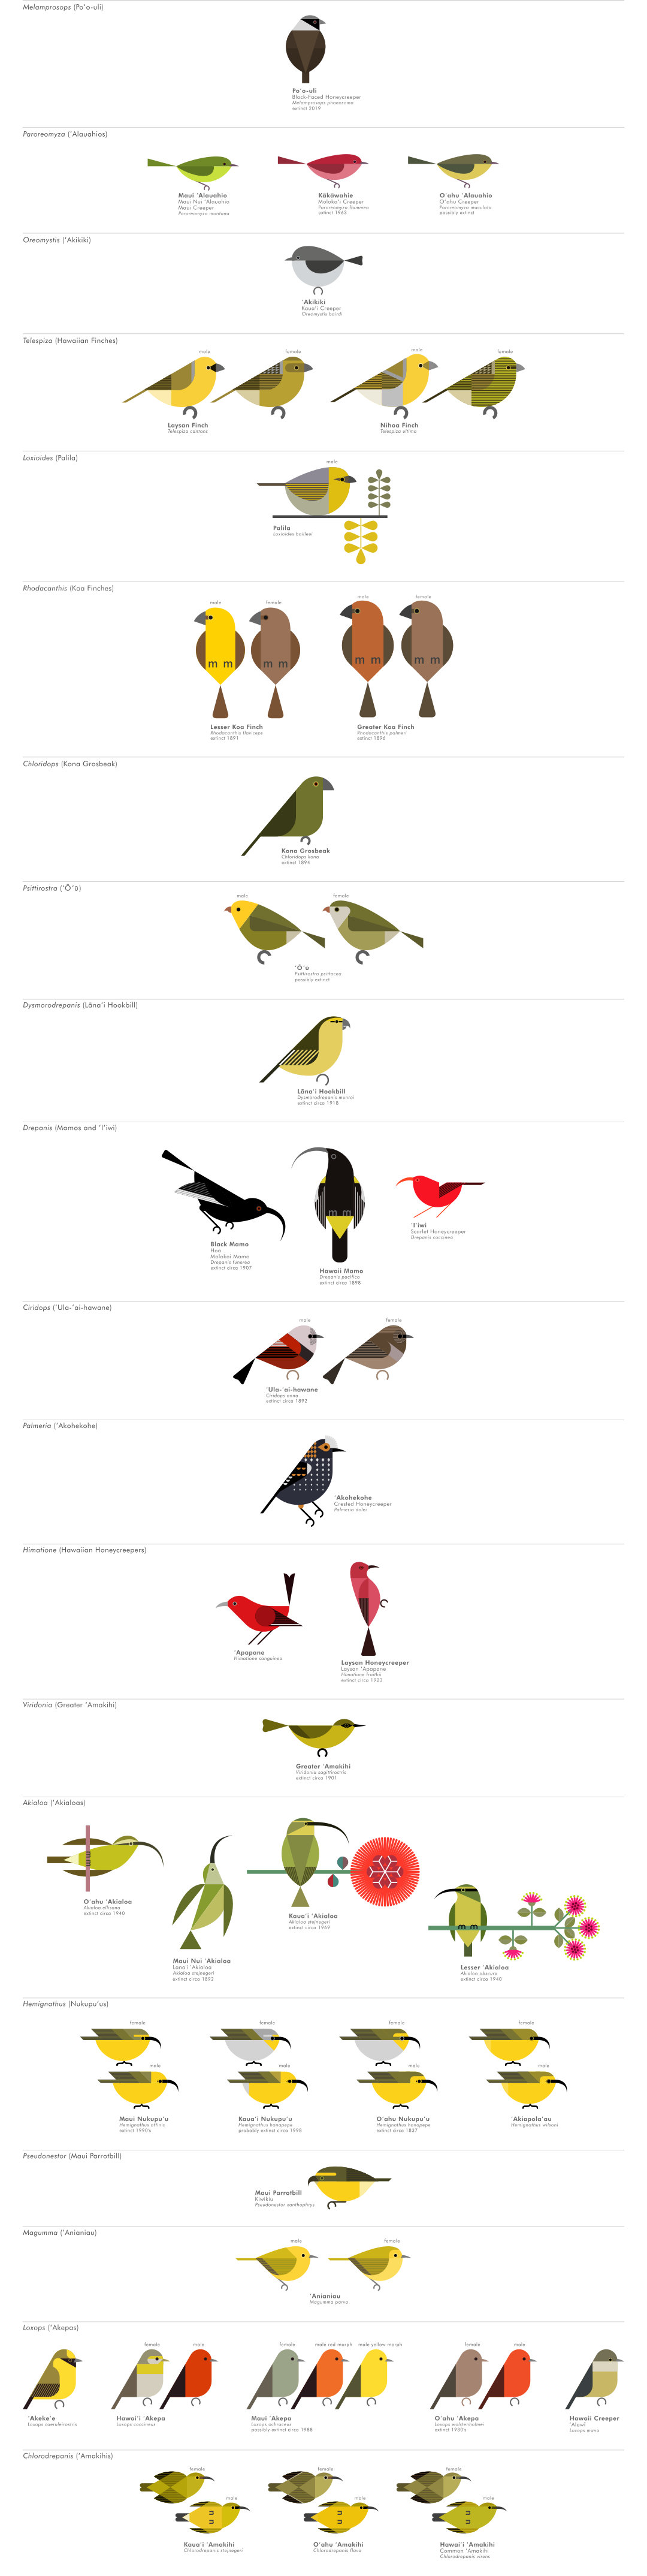 scott partridge - AVE - avian vector encyclopedia - hawaiian finches - bird vector art